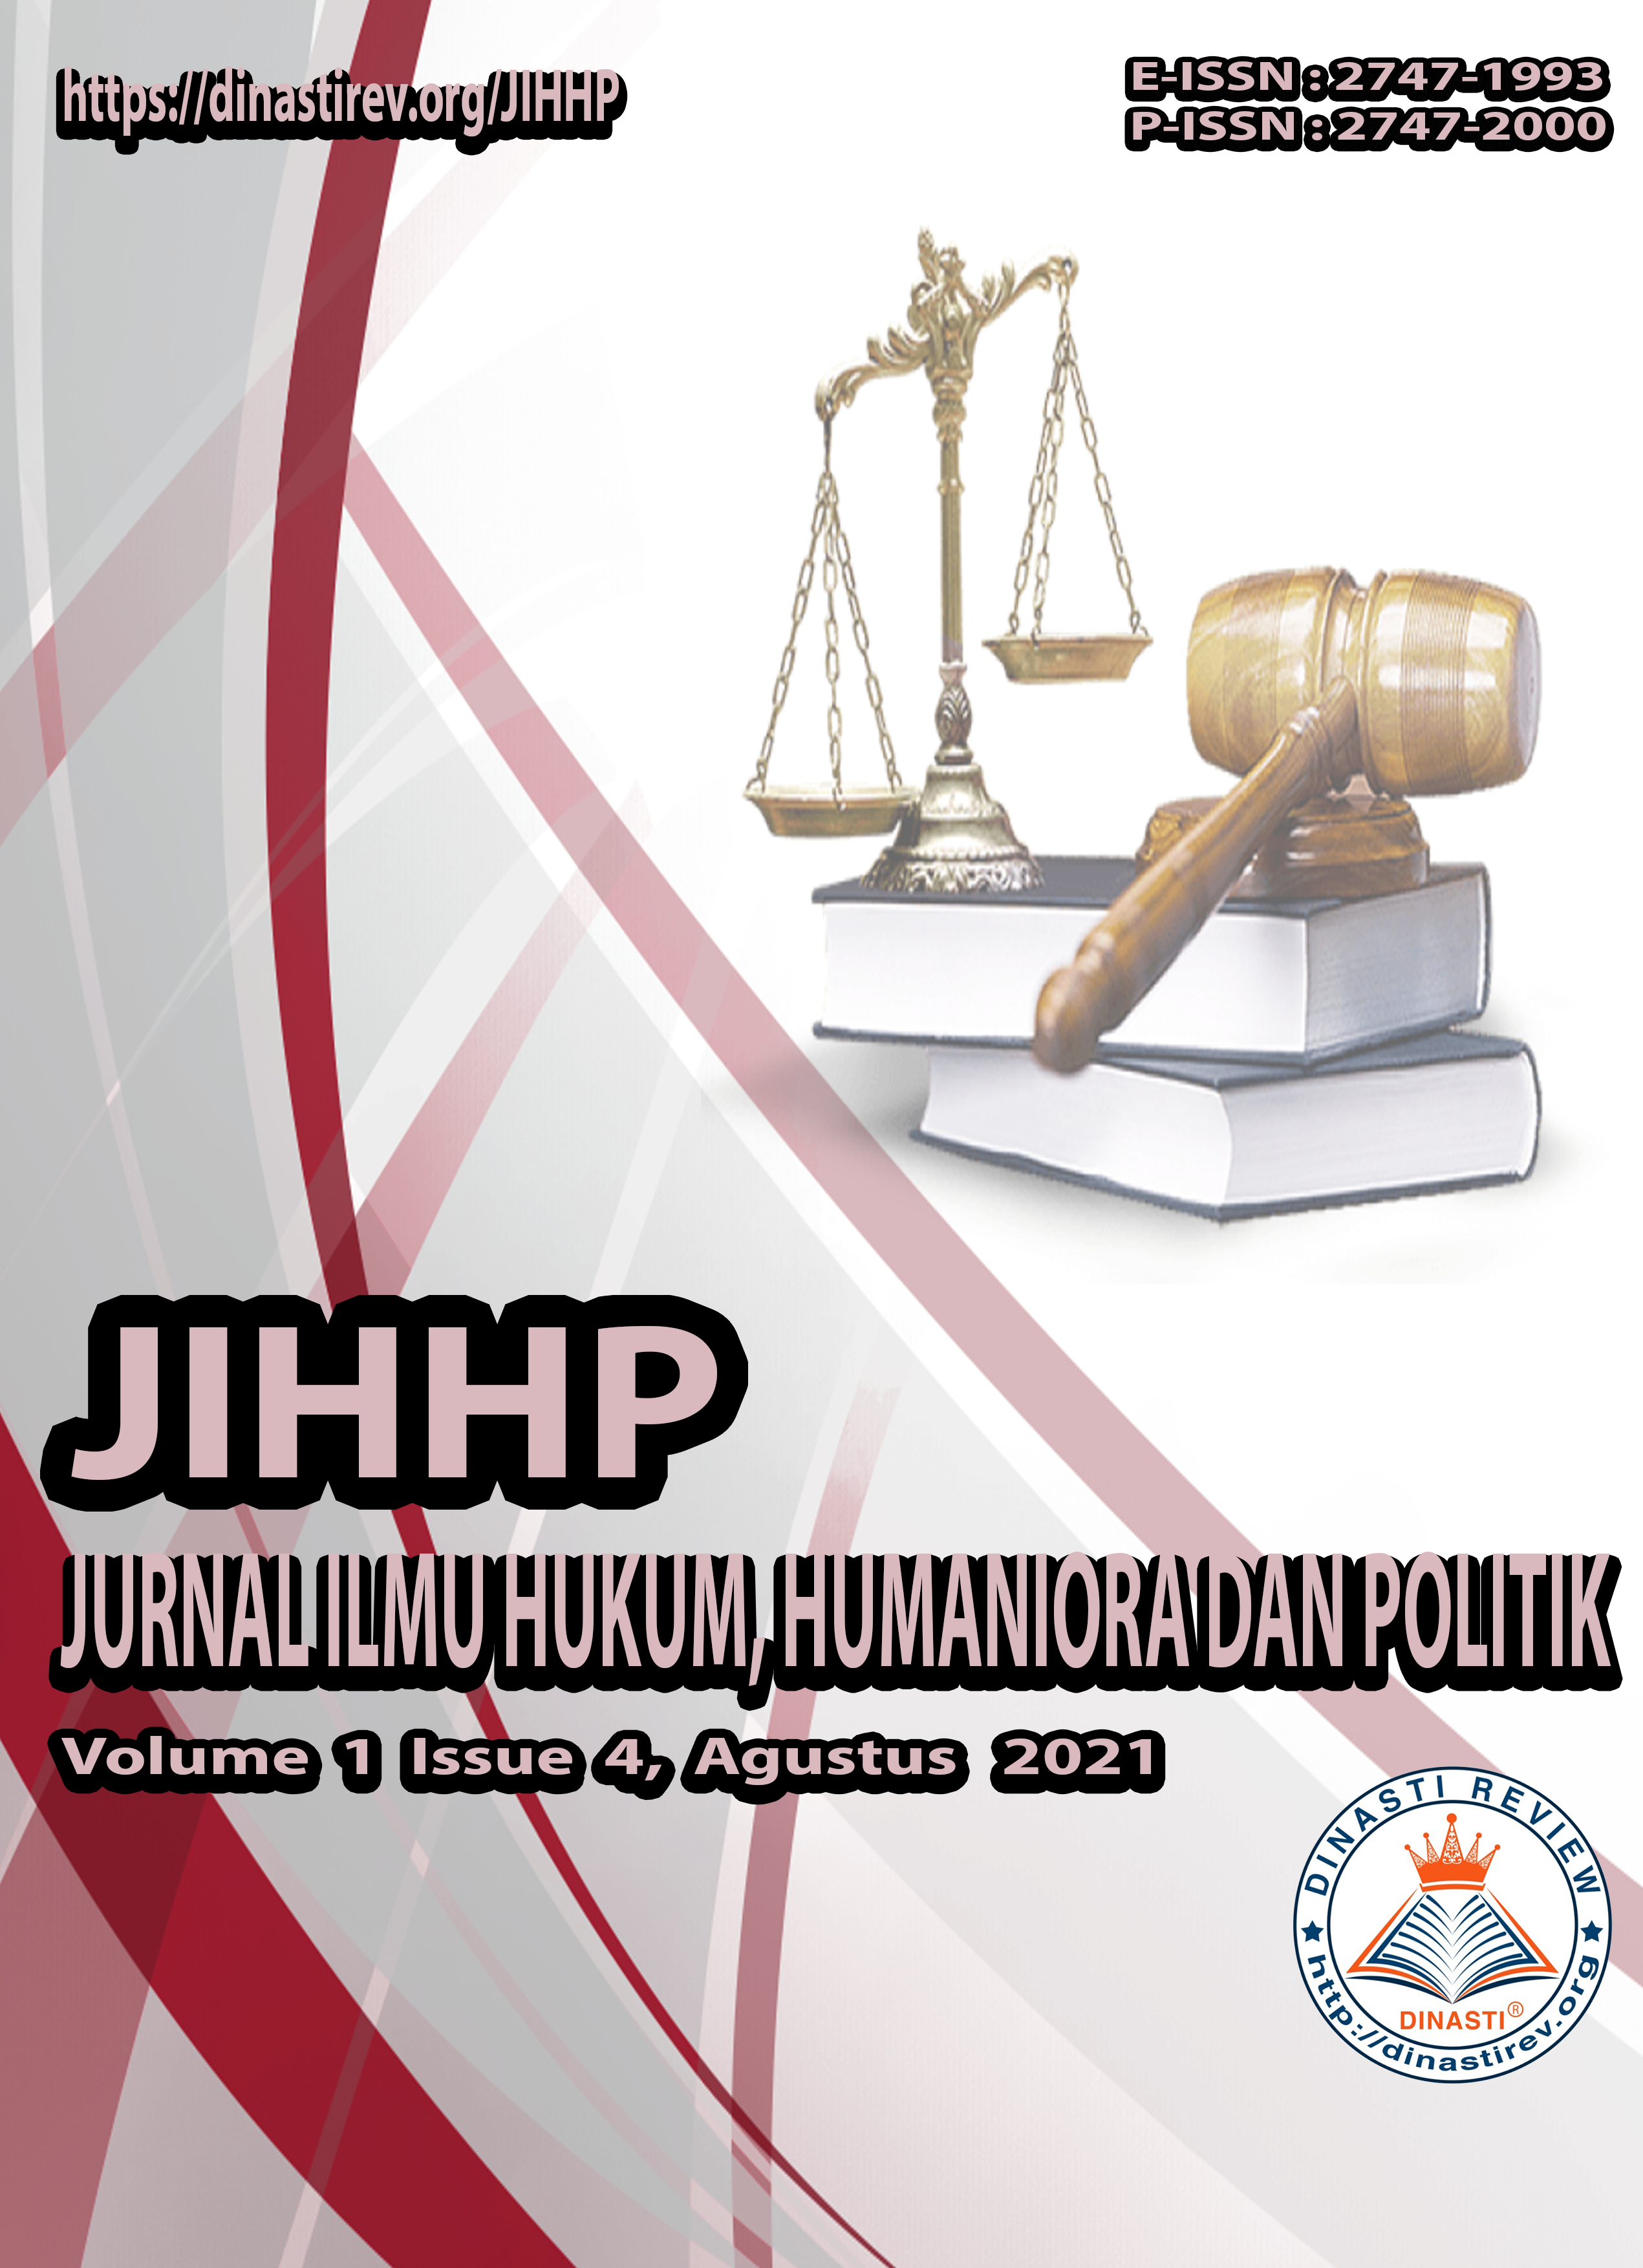 					View Vol. 1 No. 4 (2021): (JIHHP) Jurnal Ilmu Hukum, Humaniora dan Politik (Agustus 2021)
				